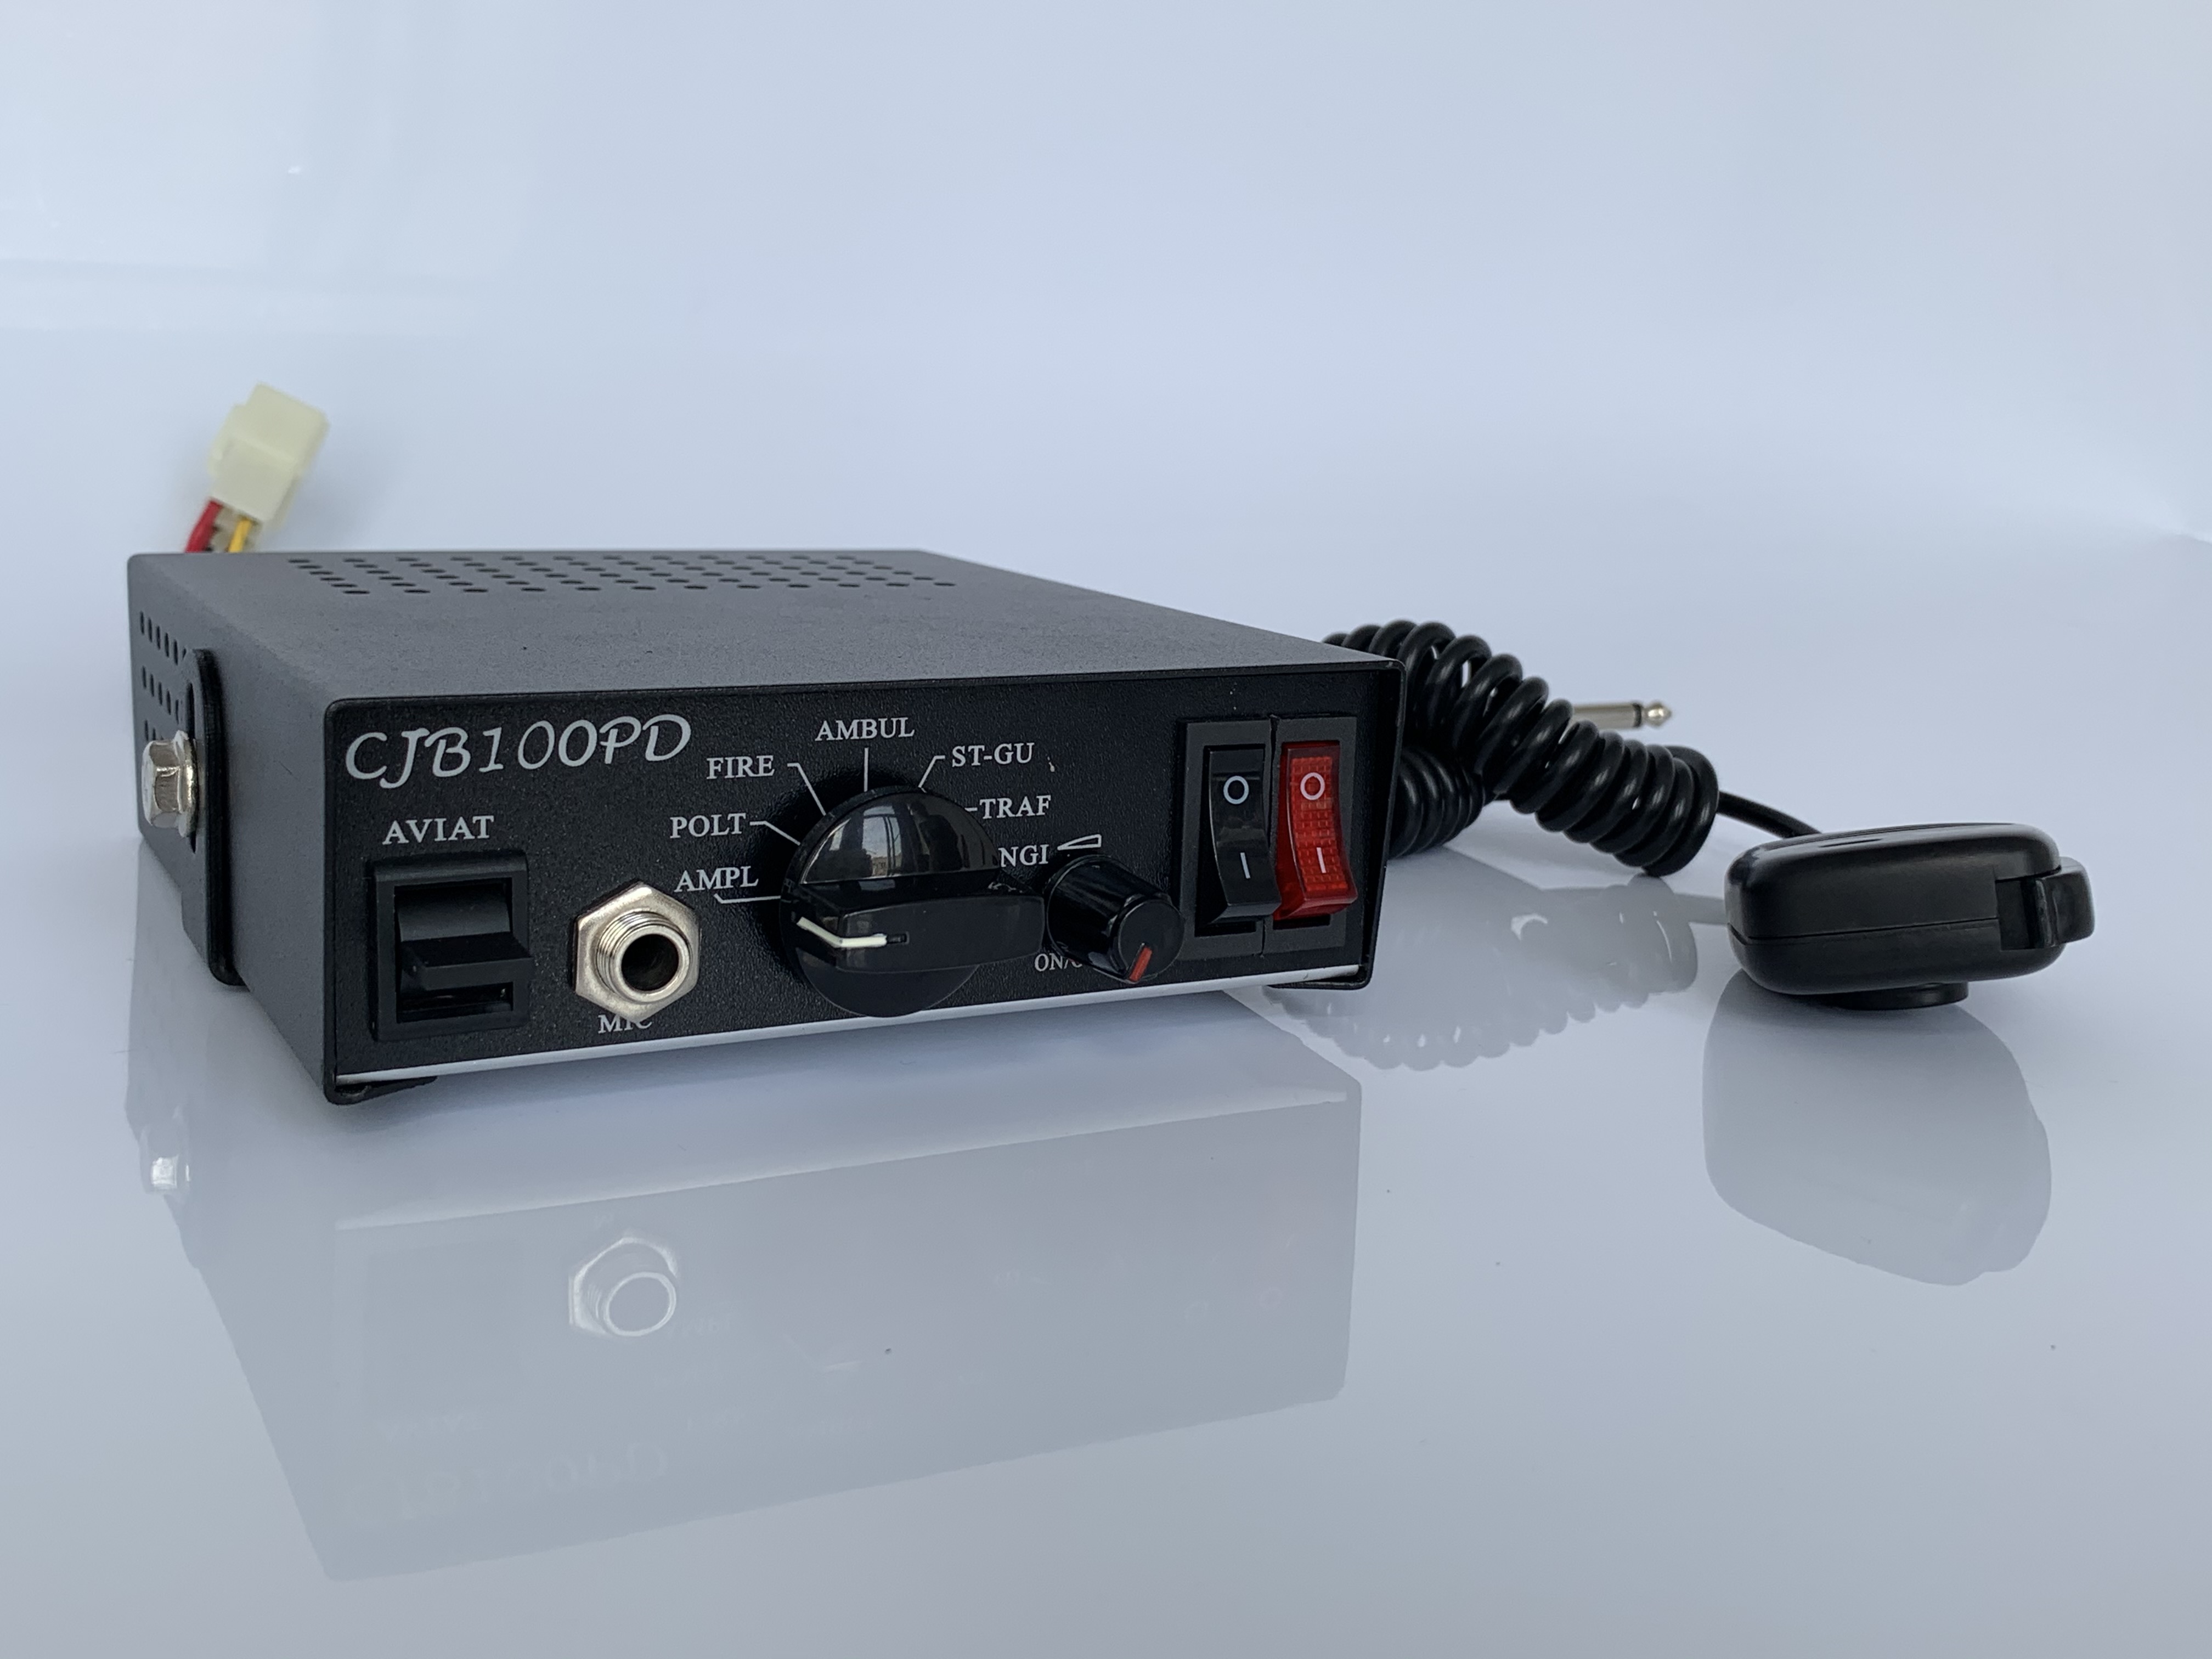 CJB-100PD Police Electronic Siren